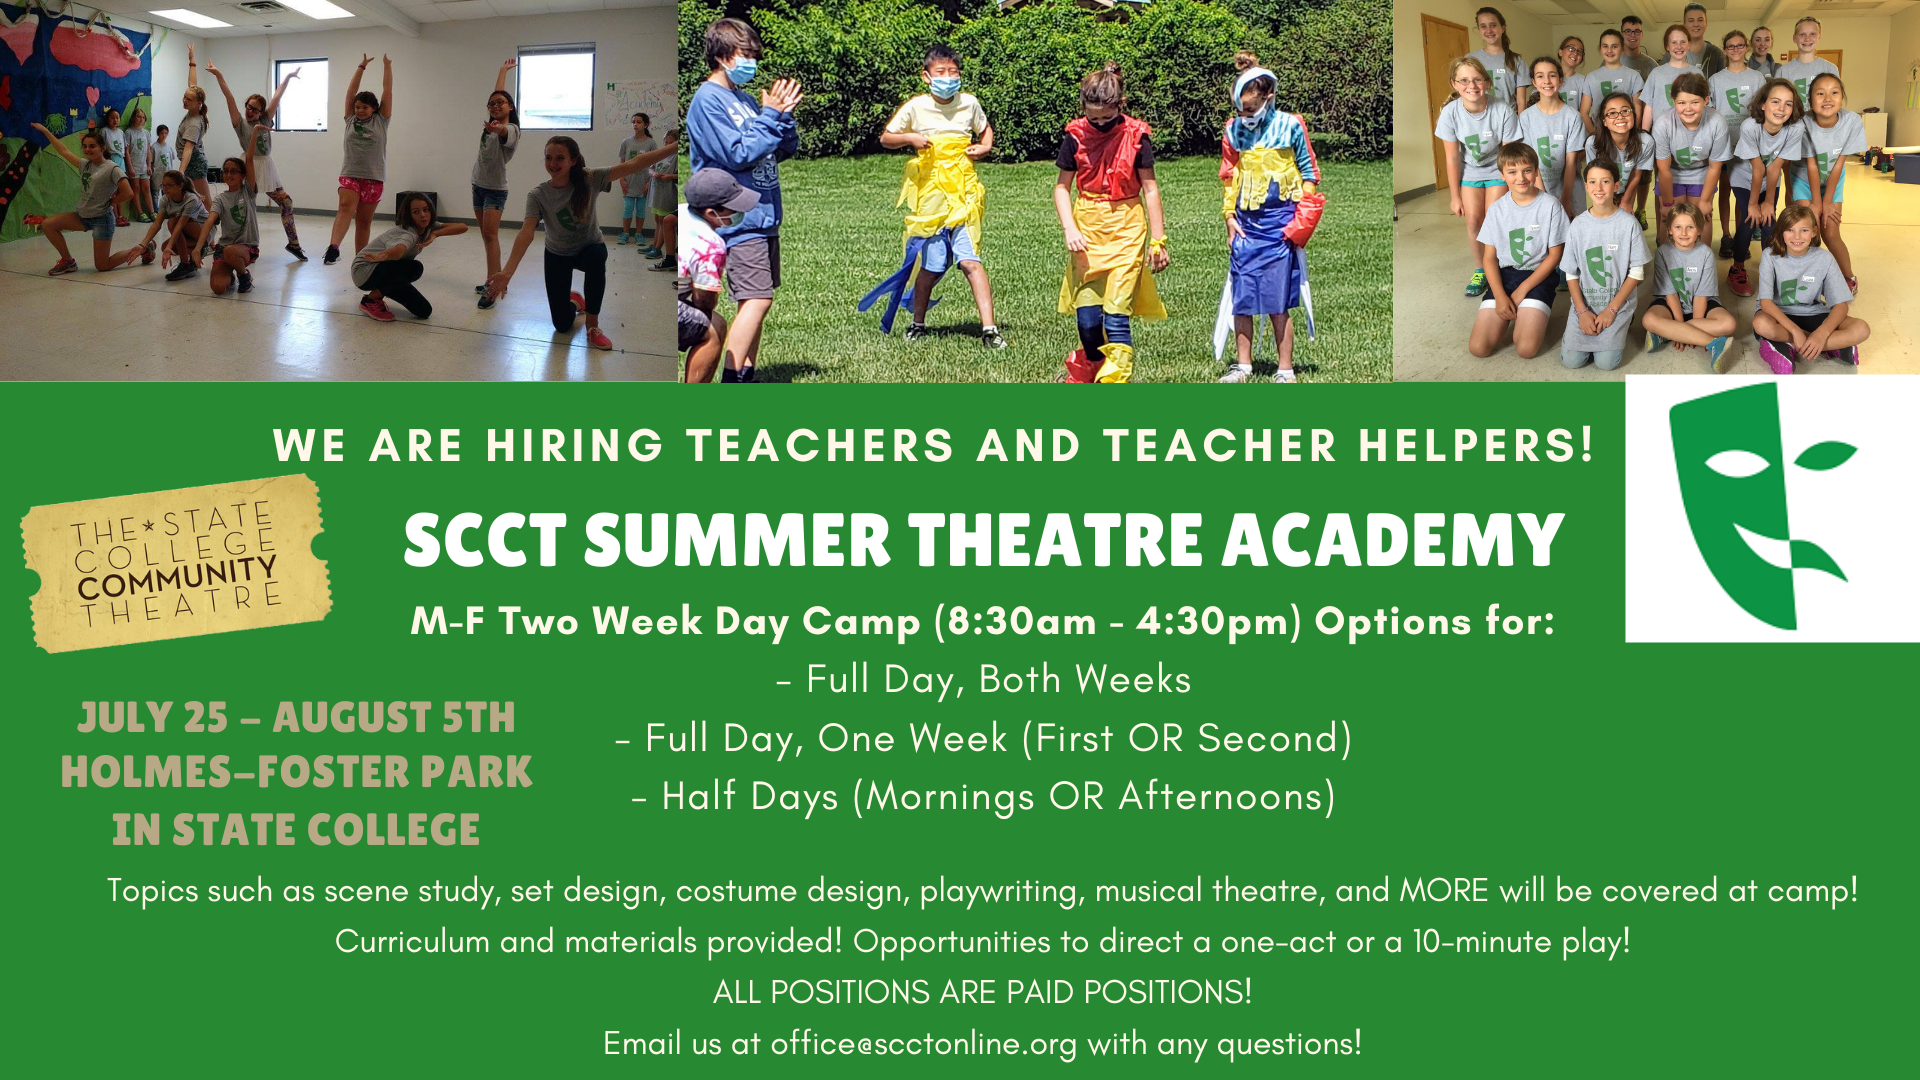 SCCT Theatre Academy Hiring - FB Post